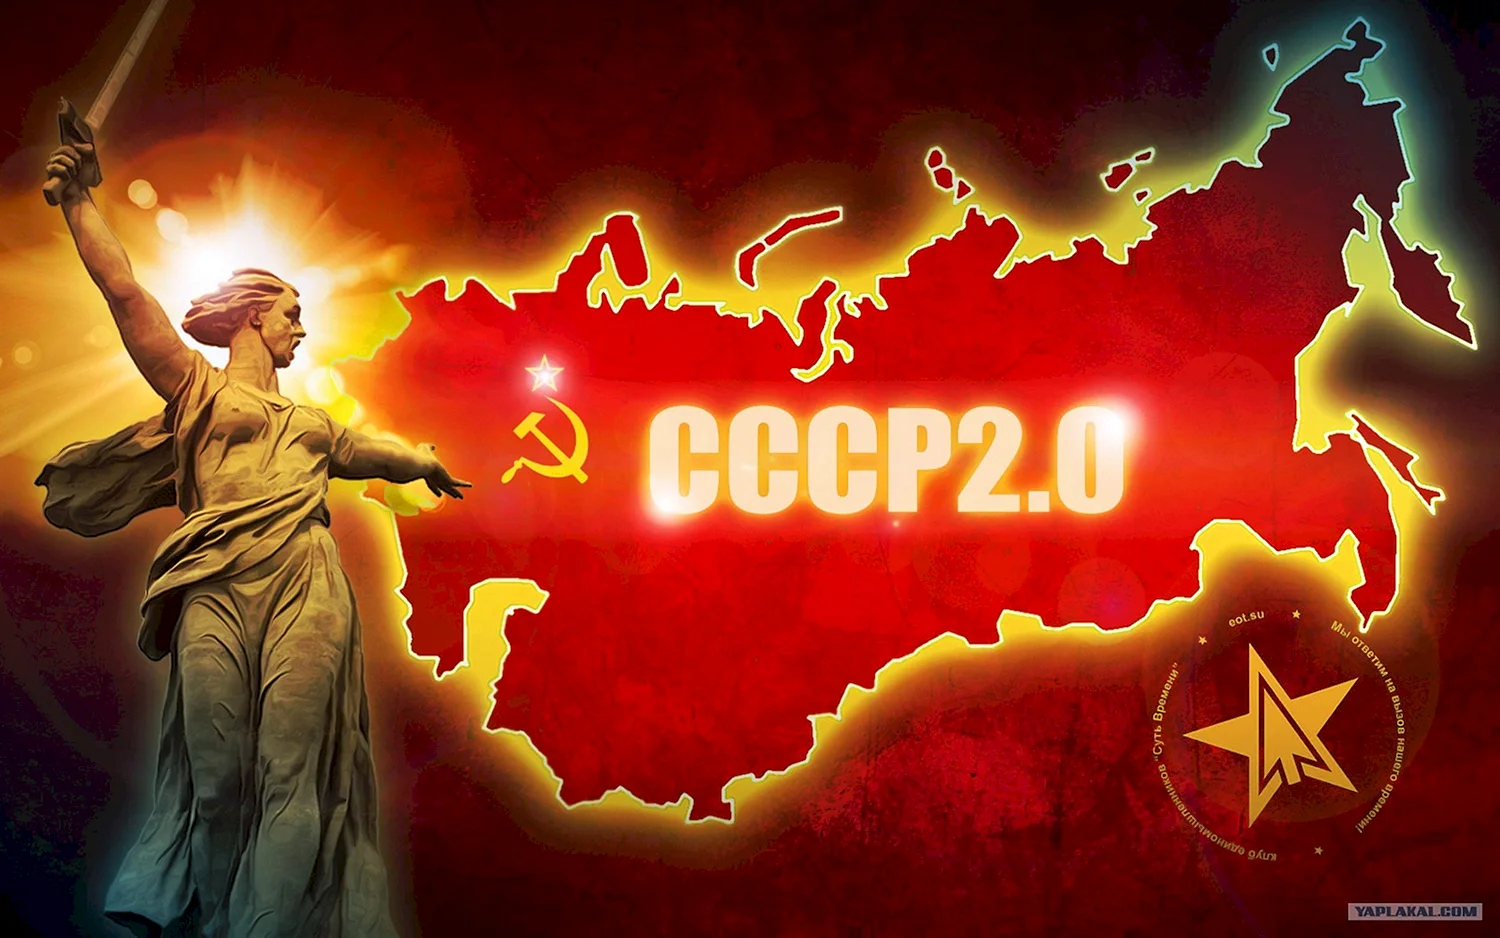 Флаг СССР 2.0